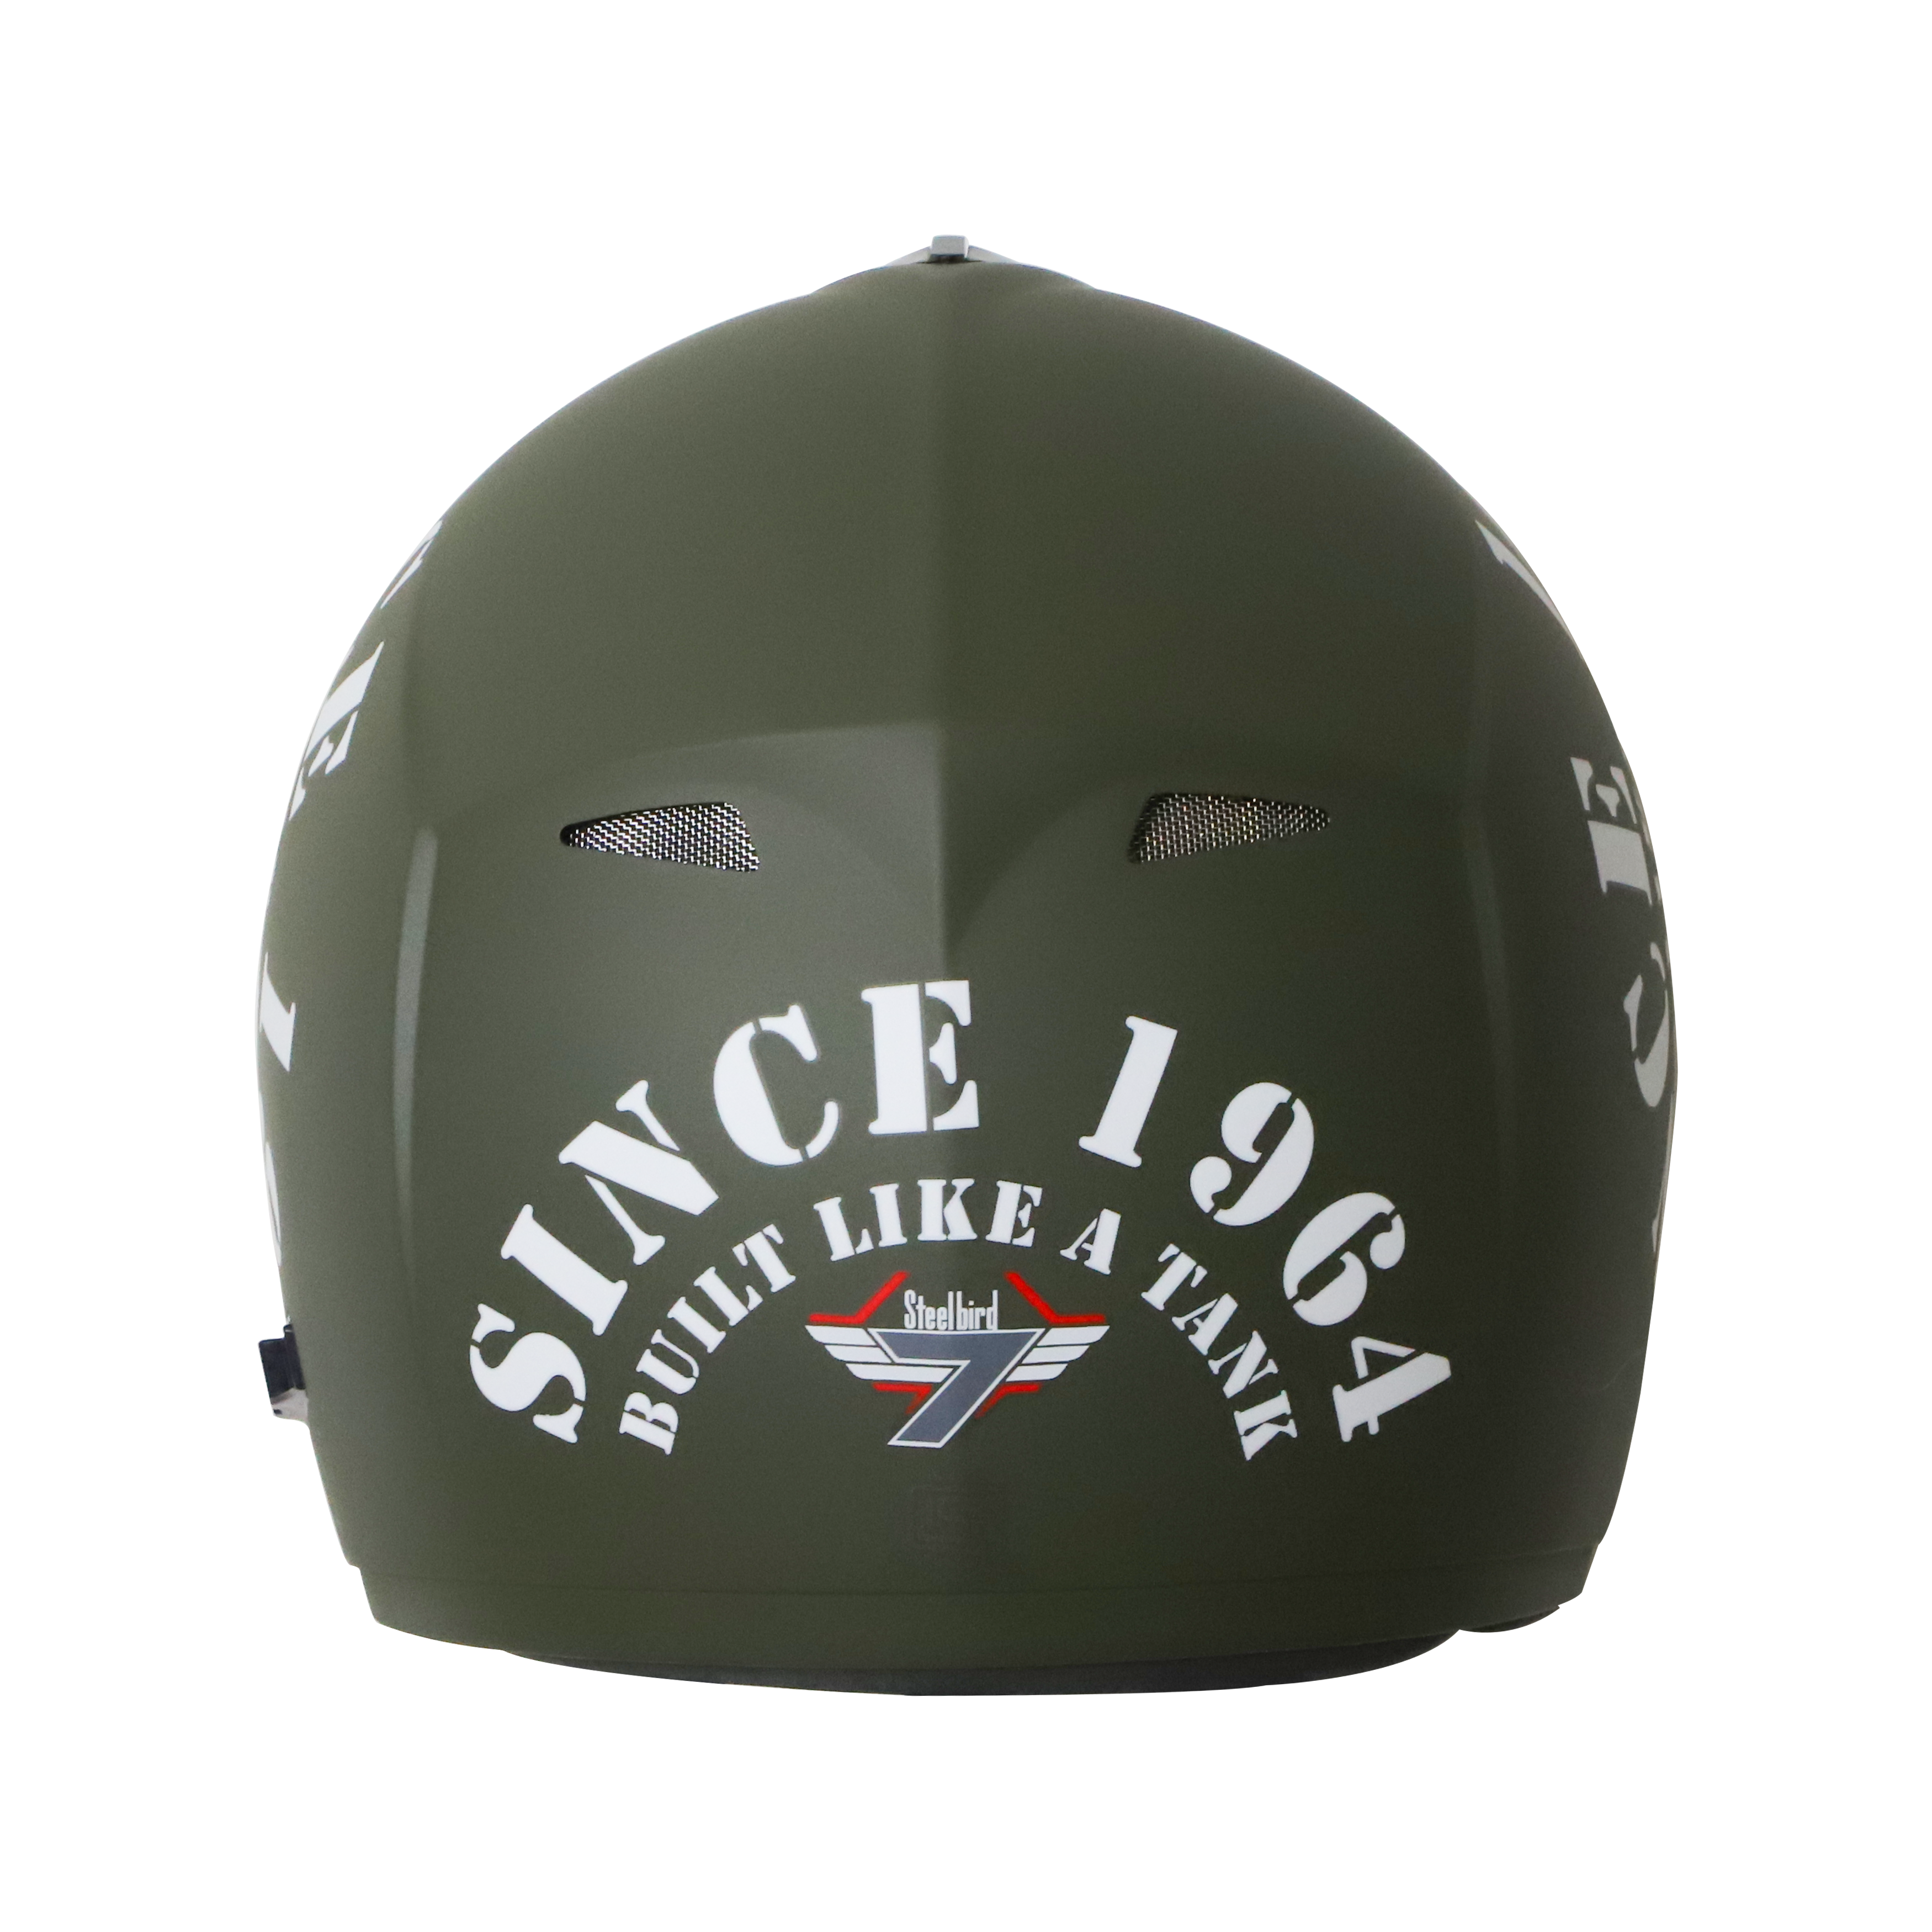 Steelbird Cyborg Tank Full Face Helmet With Chrome Silver Sun Shield, ISI Certified Helmet (Matt Battle Green White)